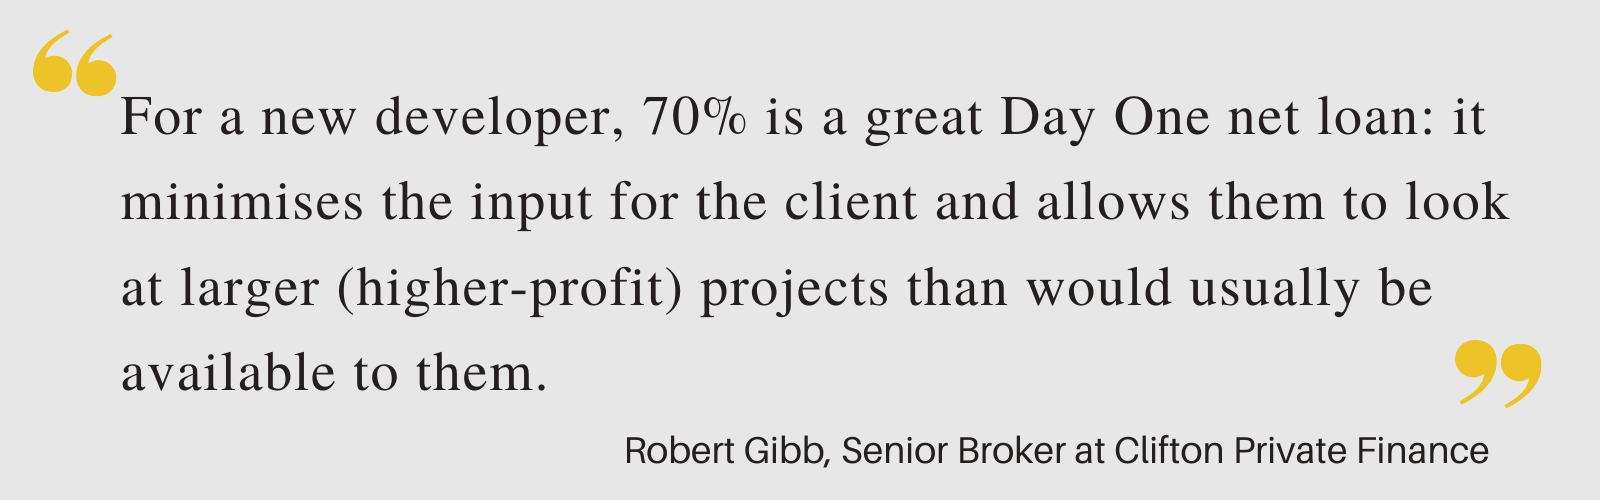 Robert-Gibb-Quote-70-Percent-Net-Bridging-Loan-For-Flat-Development-In-London